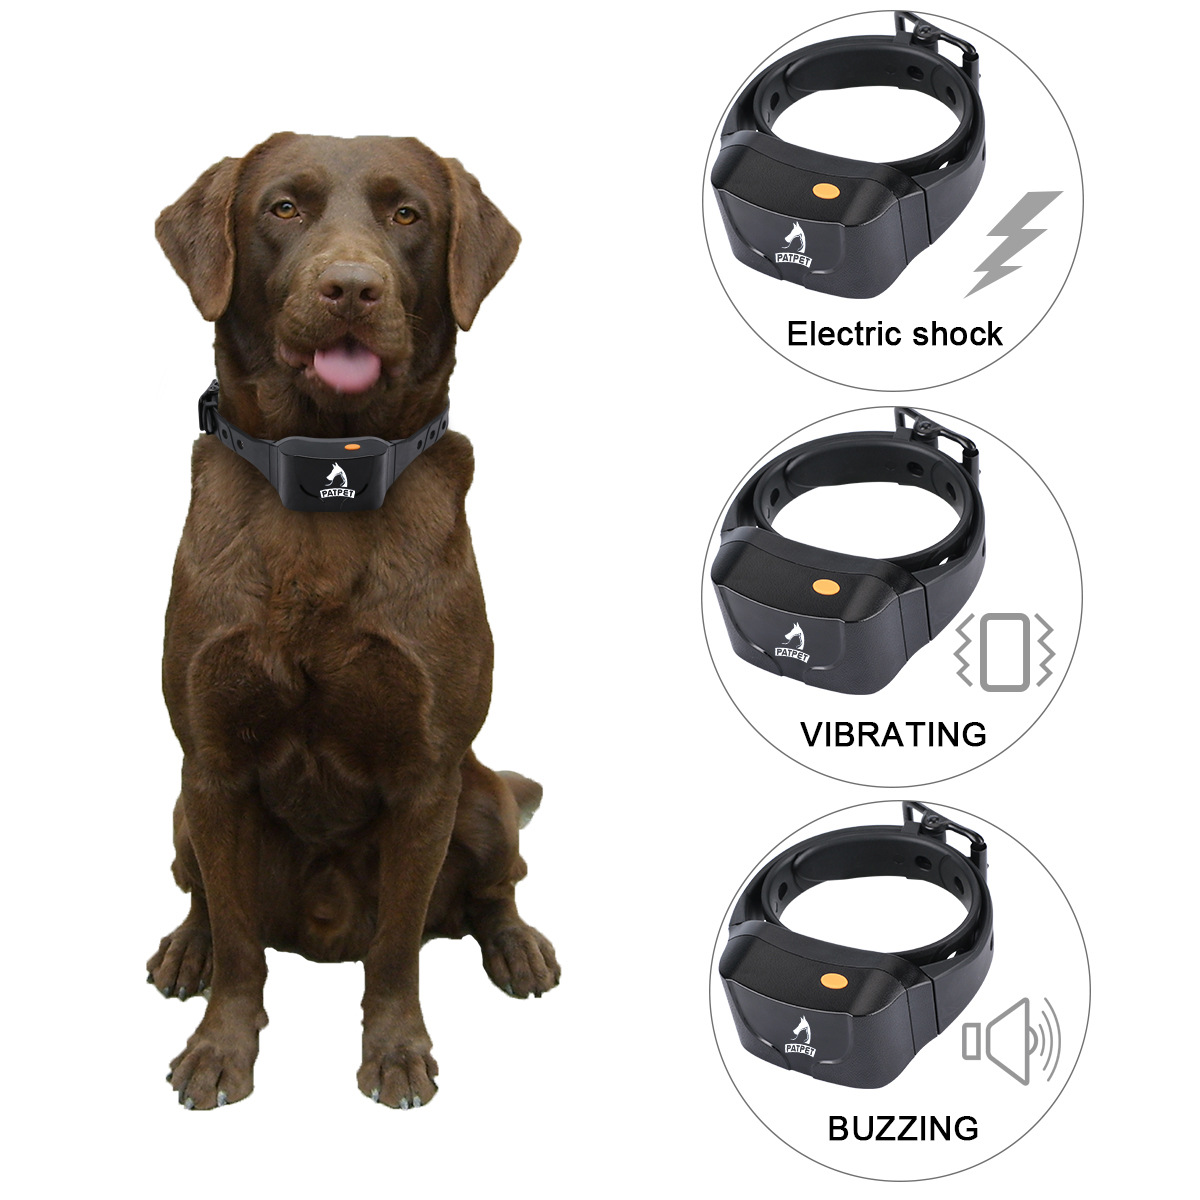 patpet p-collar 630 eu plug dog training collar rechargeable & waterproof blindoperation pet